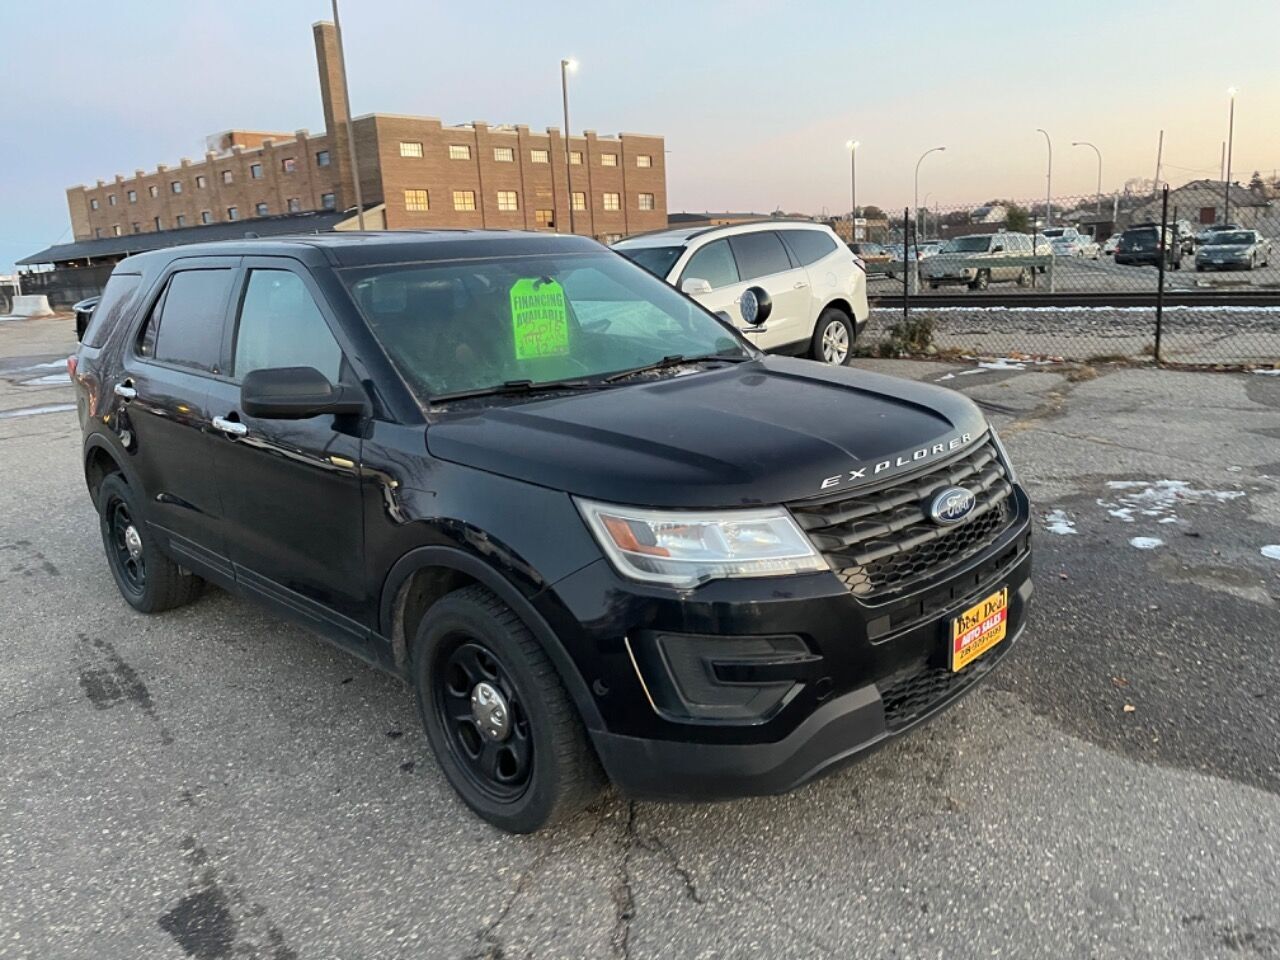 2018 Ford Explorer Police Interceptor Utility